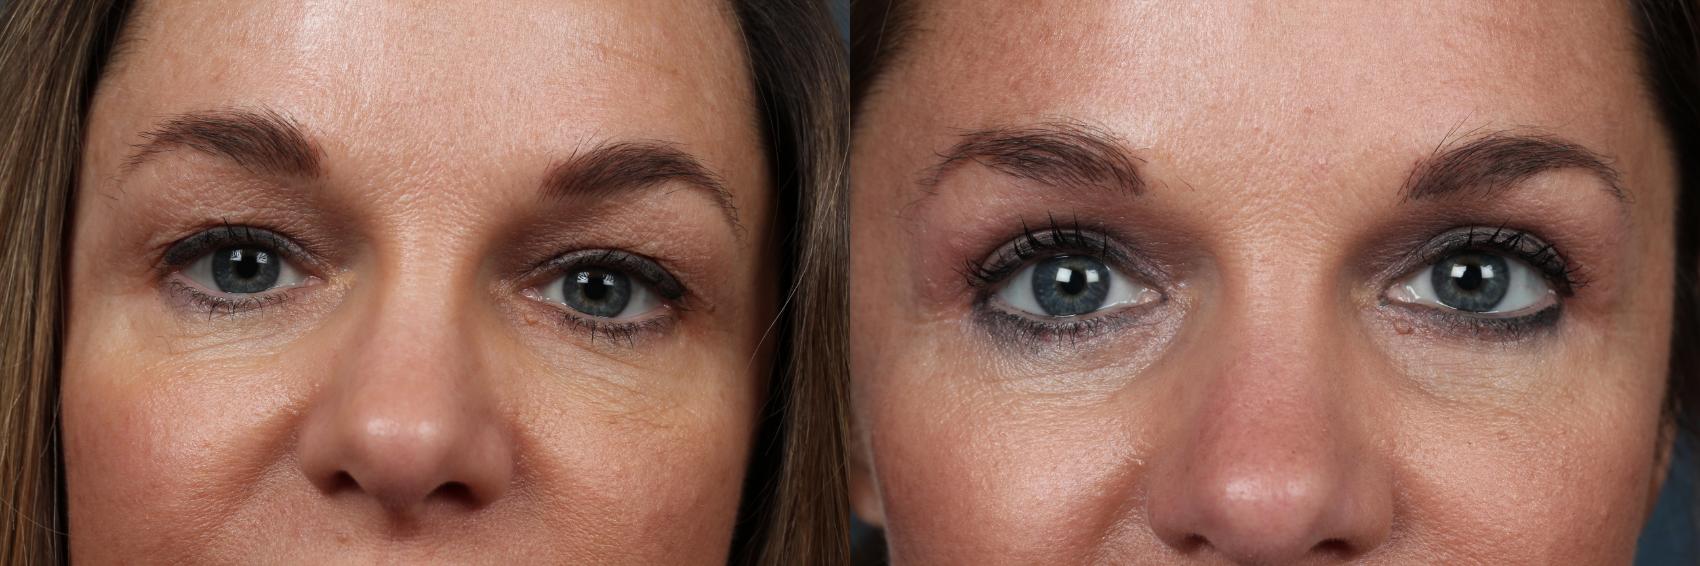 Eyelid Surgery Case 585 Before & After View #1 | Louisville, KY | CaloSpa® Rejuvenation Center